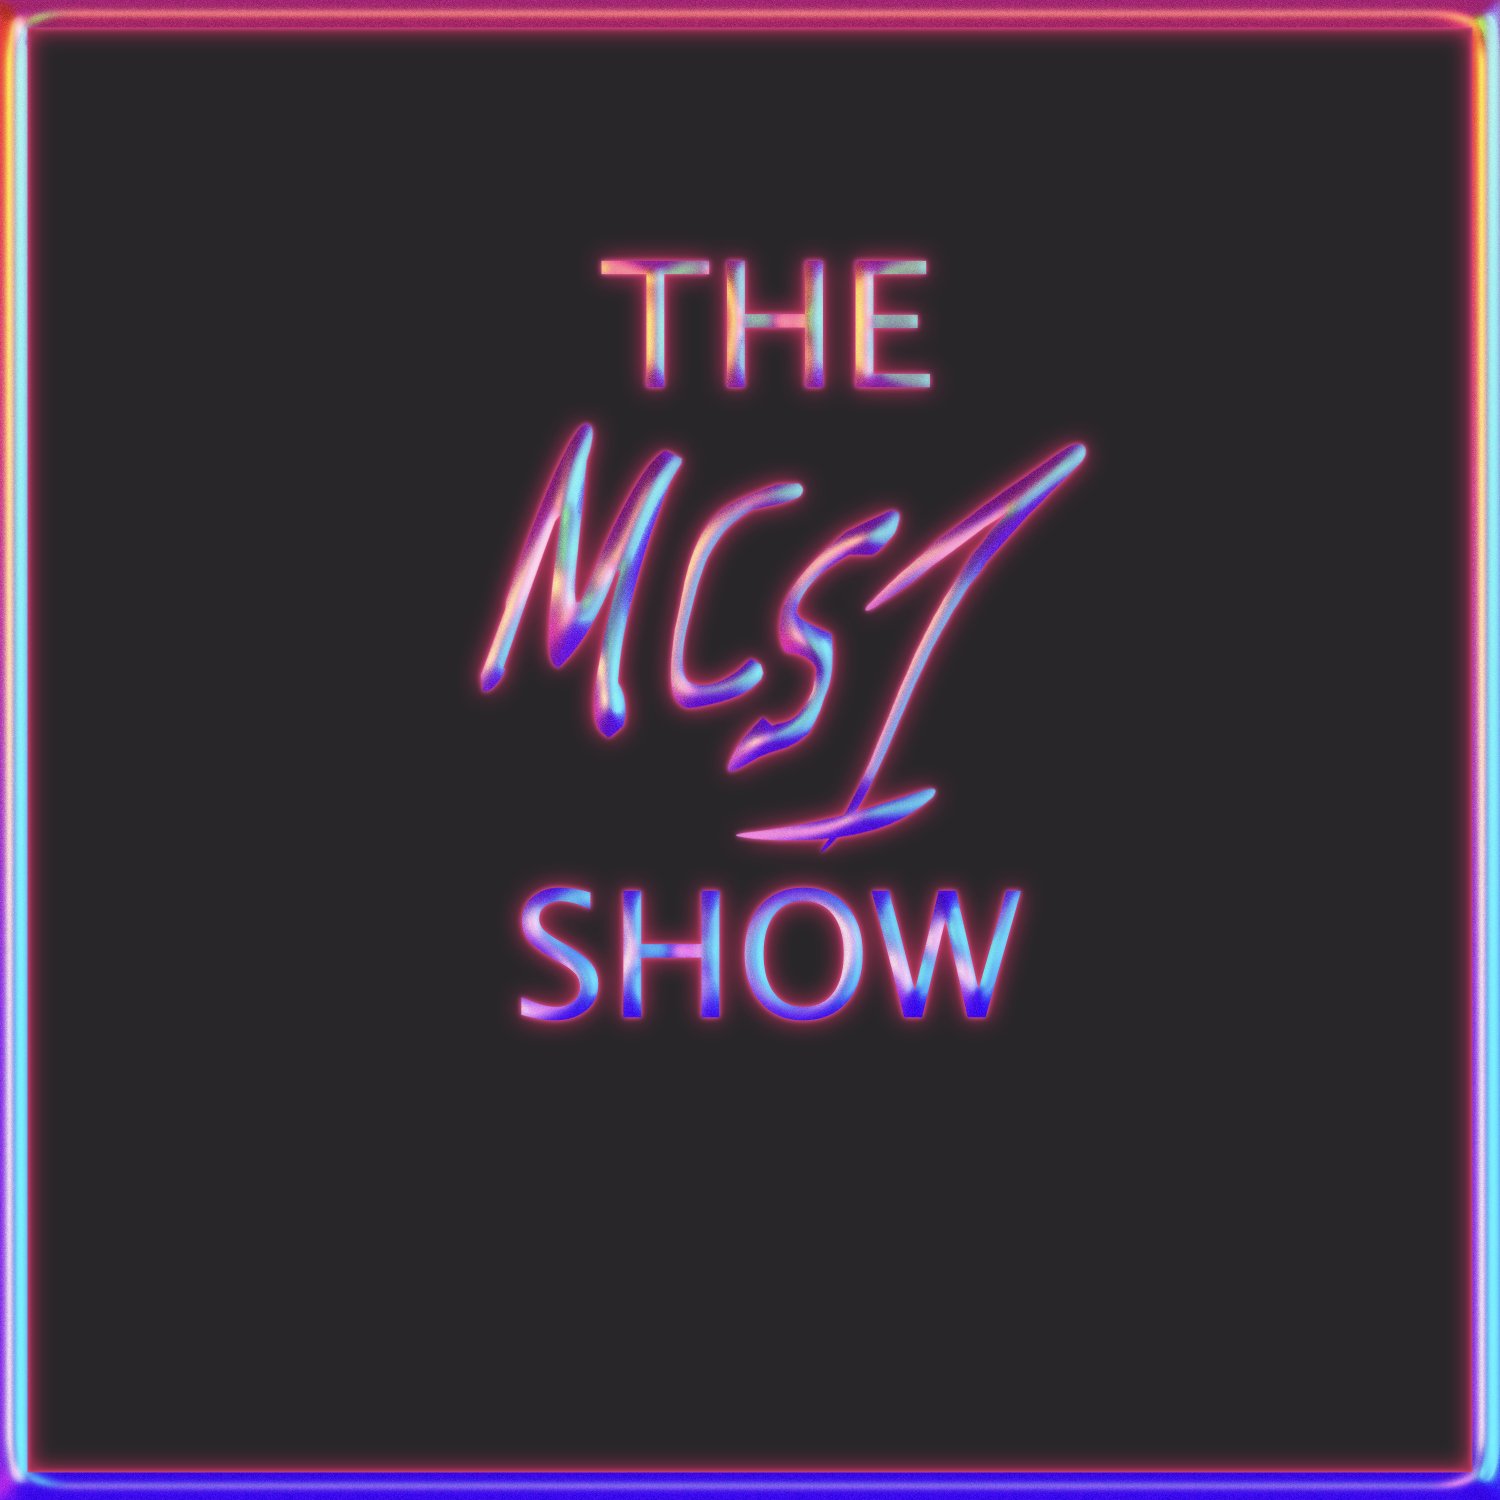 The MCS1 Show